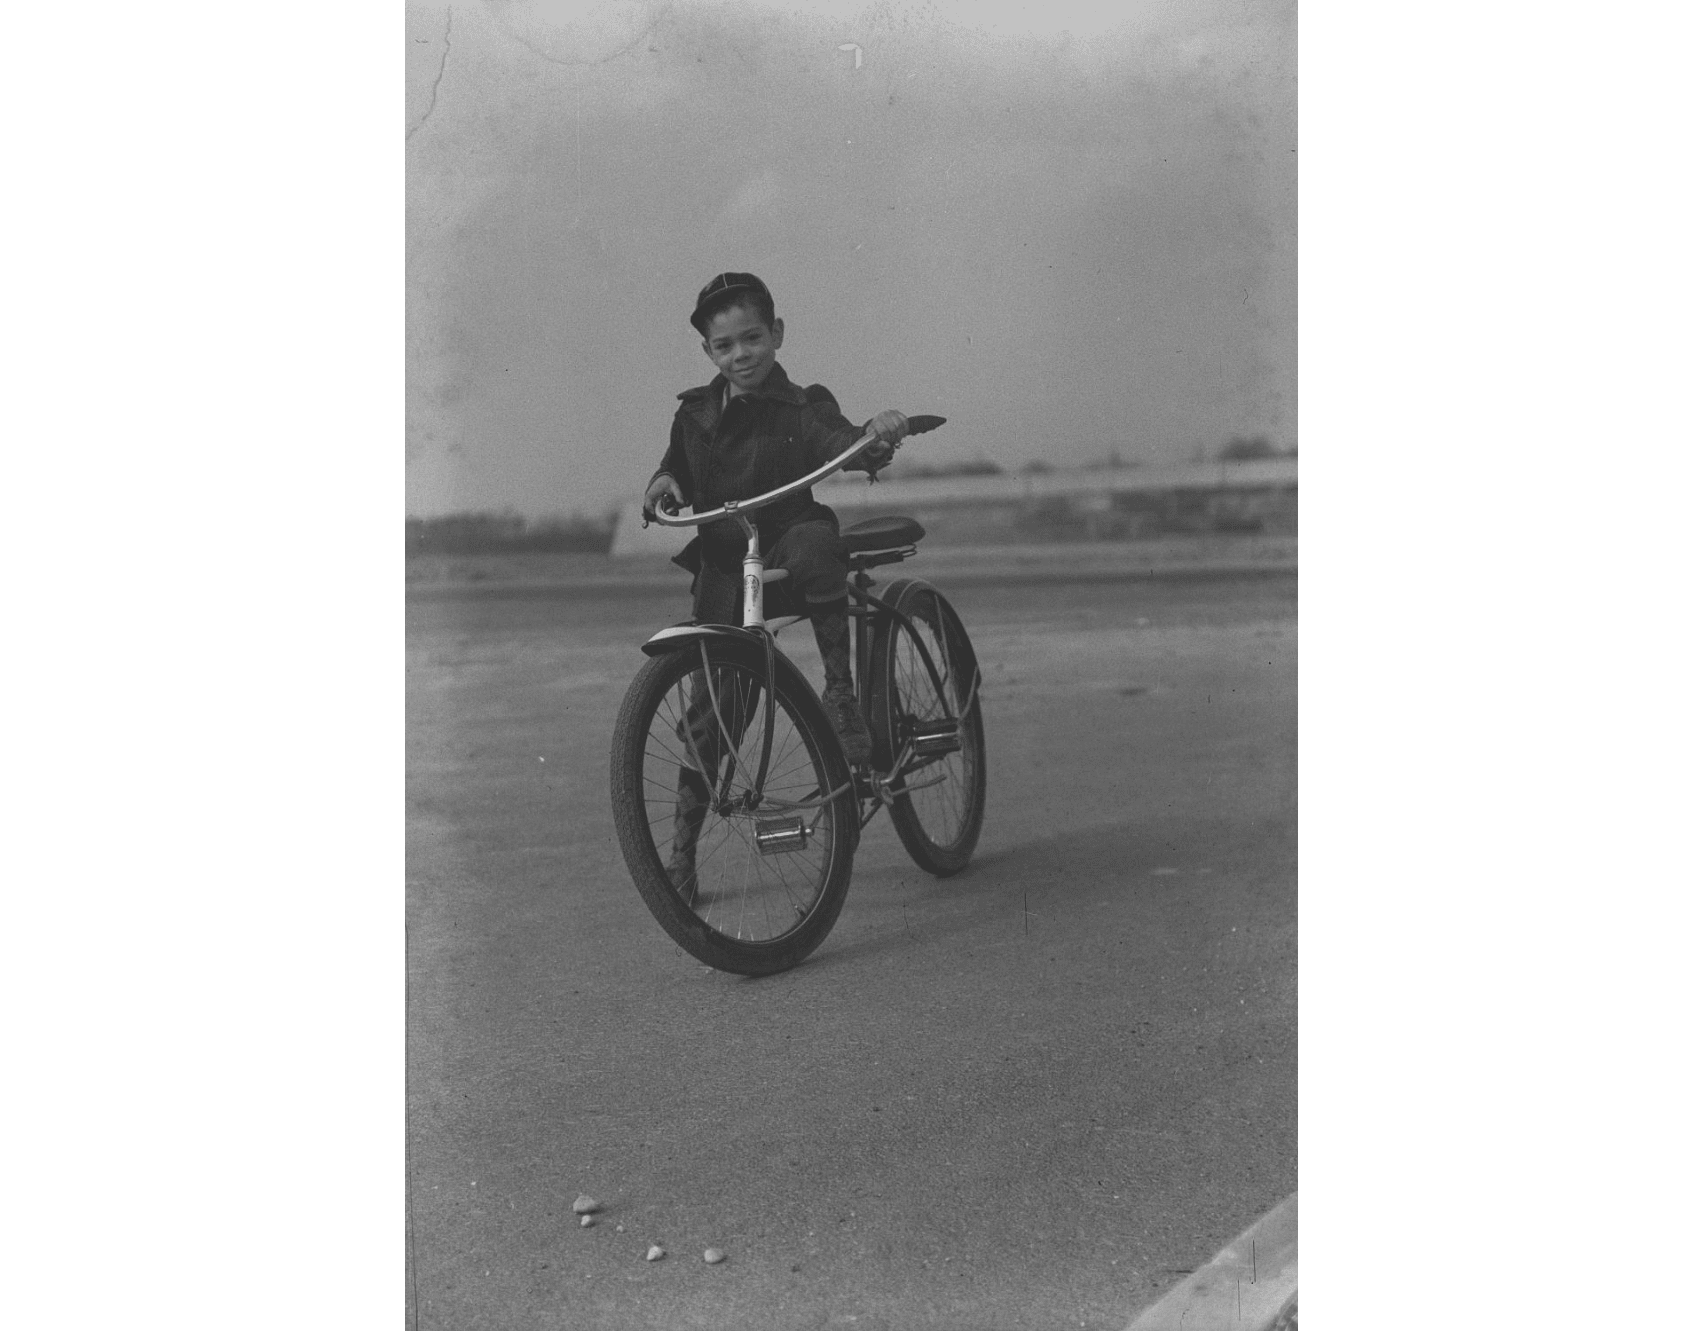 Jack Jackson faces the camera, sitting on his bike.